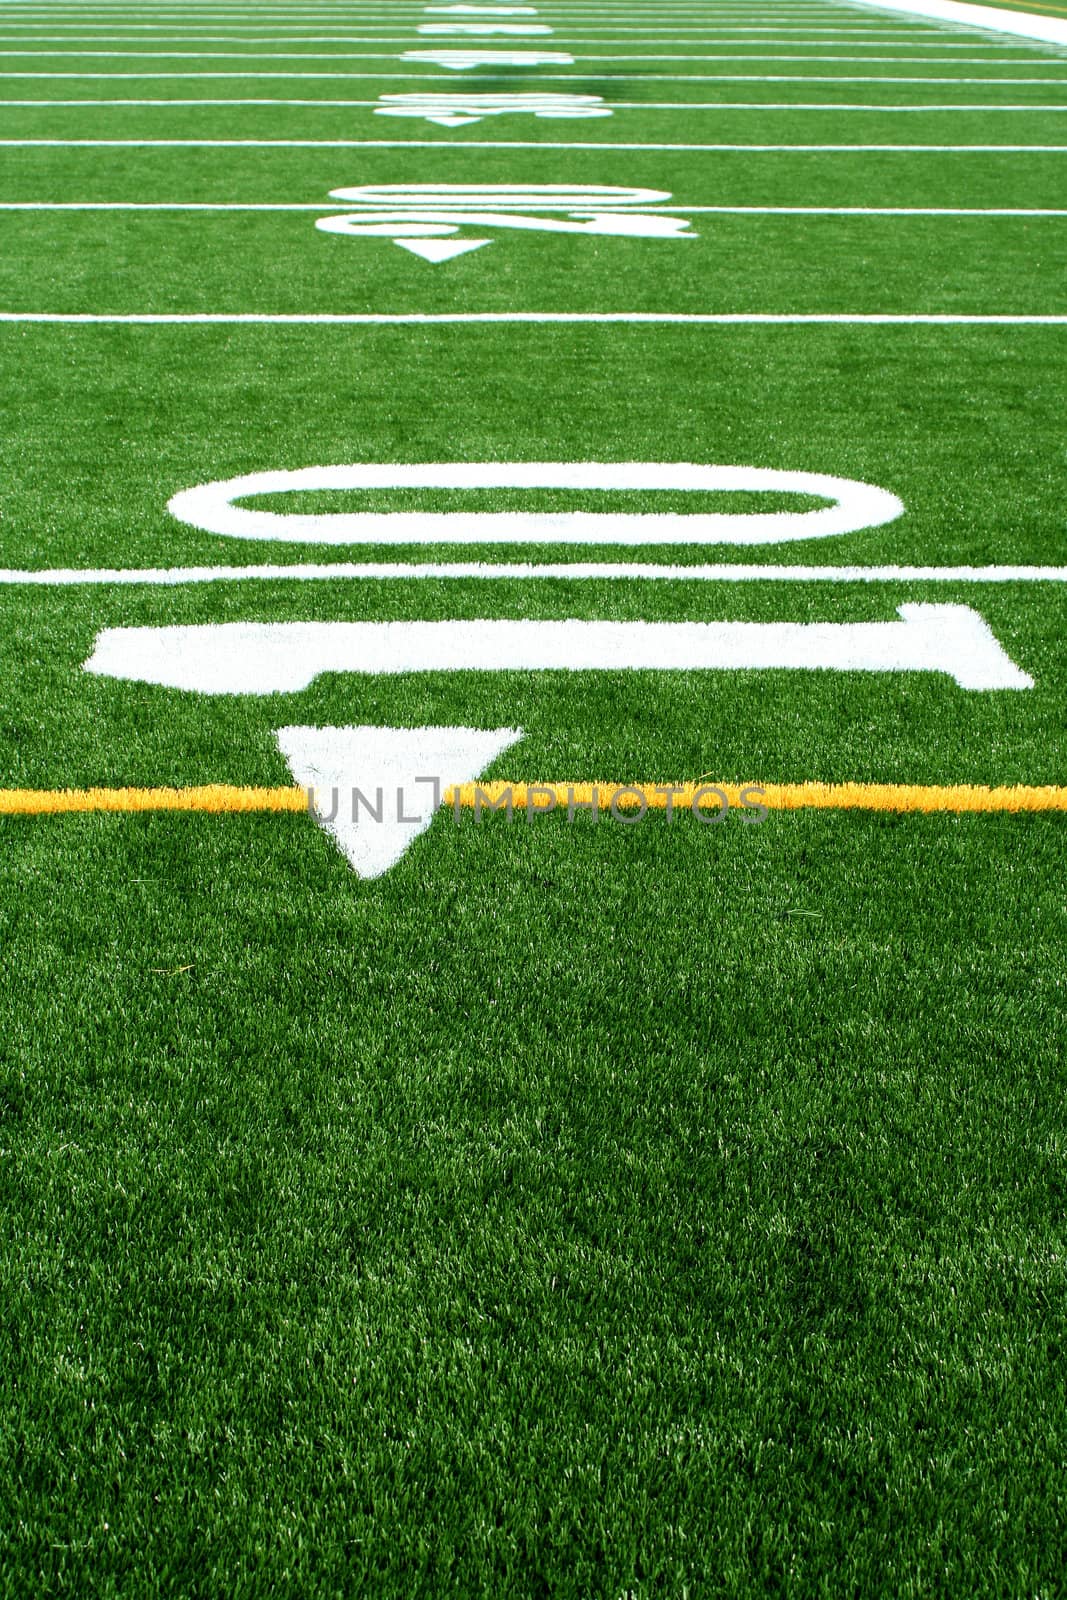 A Astro turf football field